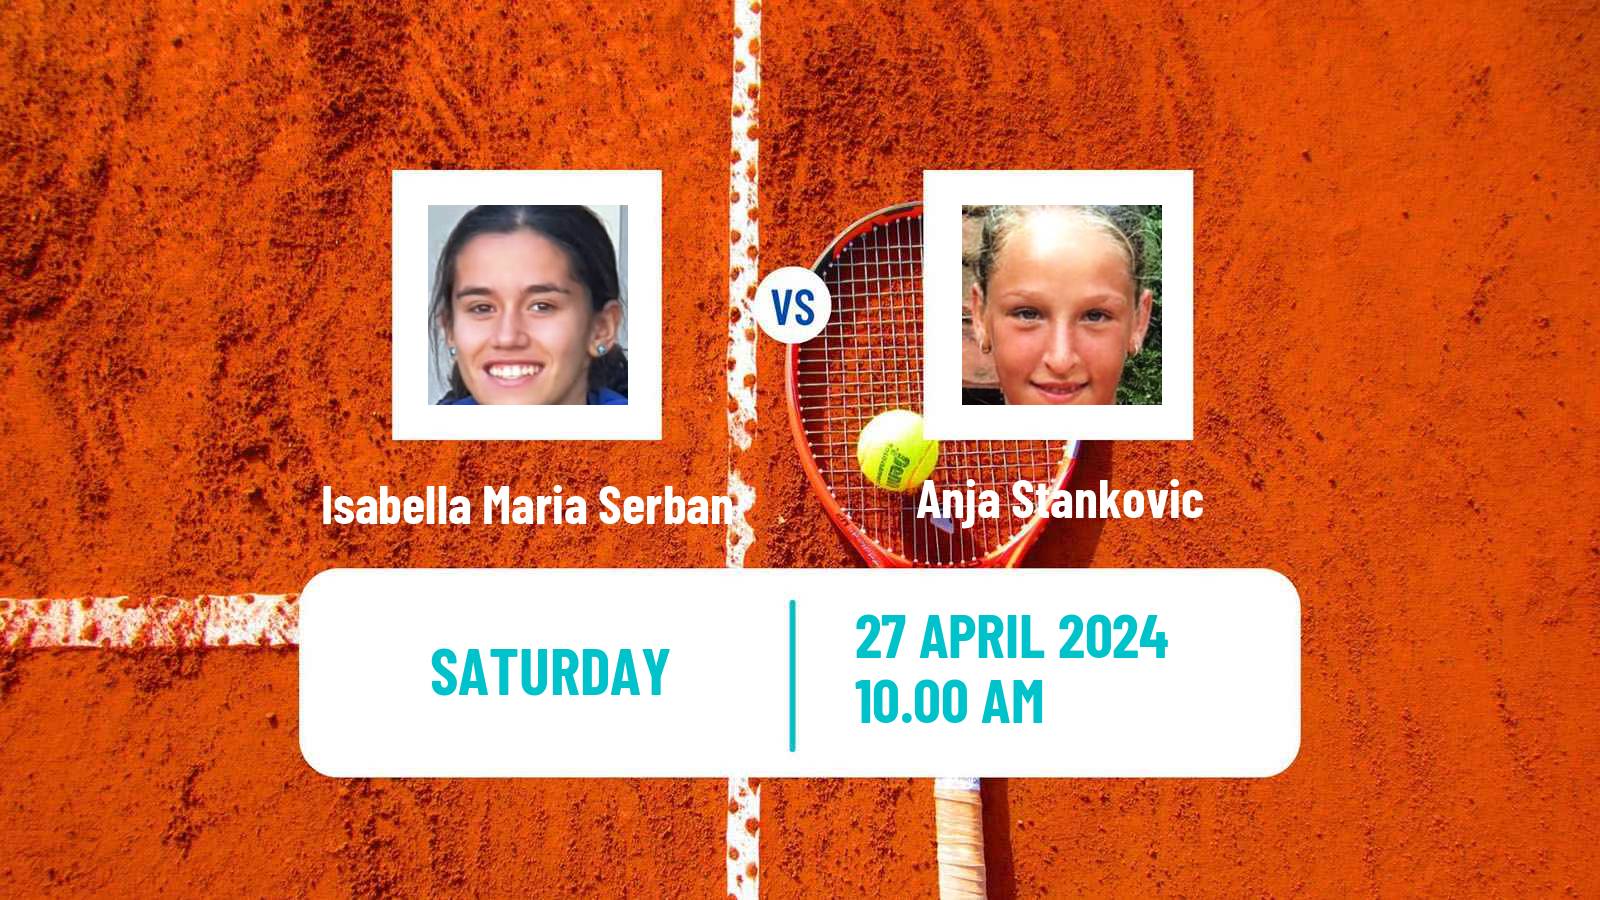 Tennis ITF W15 Kursumlijska Banja 2 Women Isabella Maria Serban - Anja Stankovic